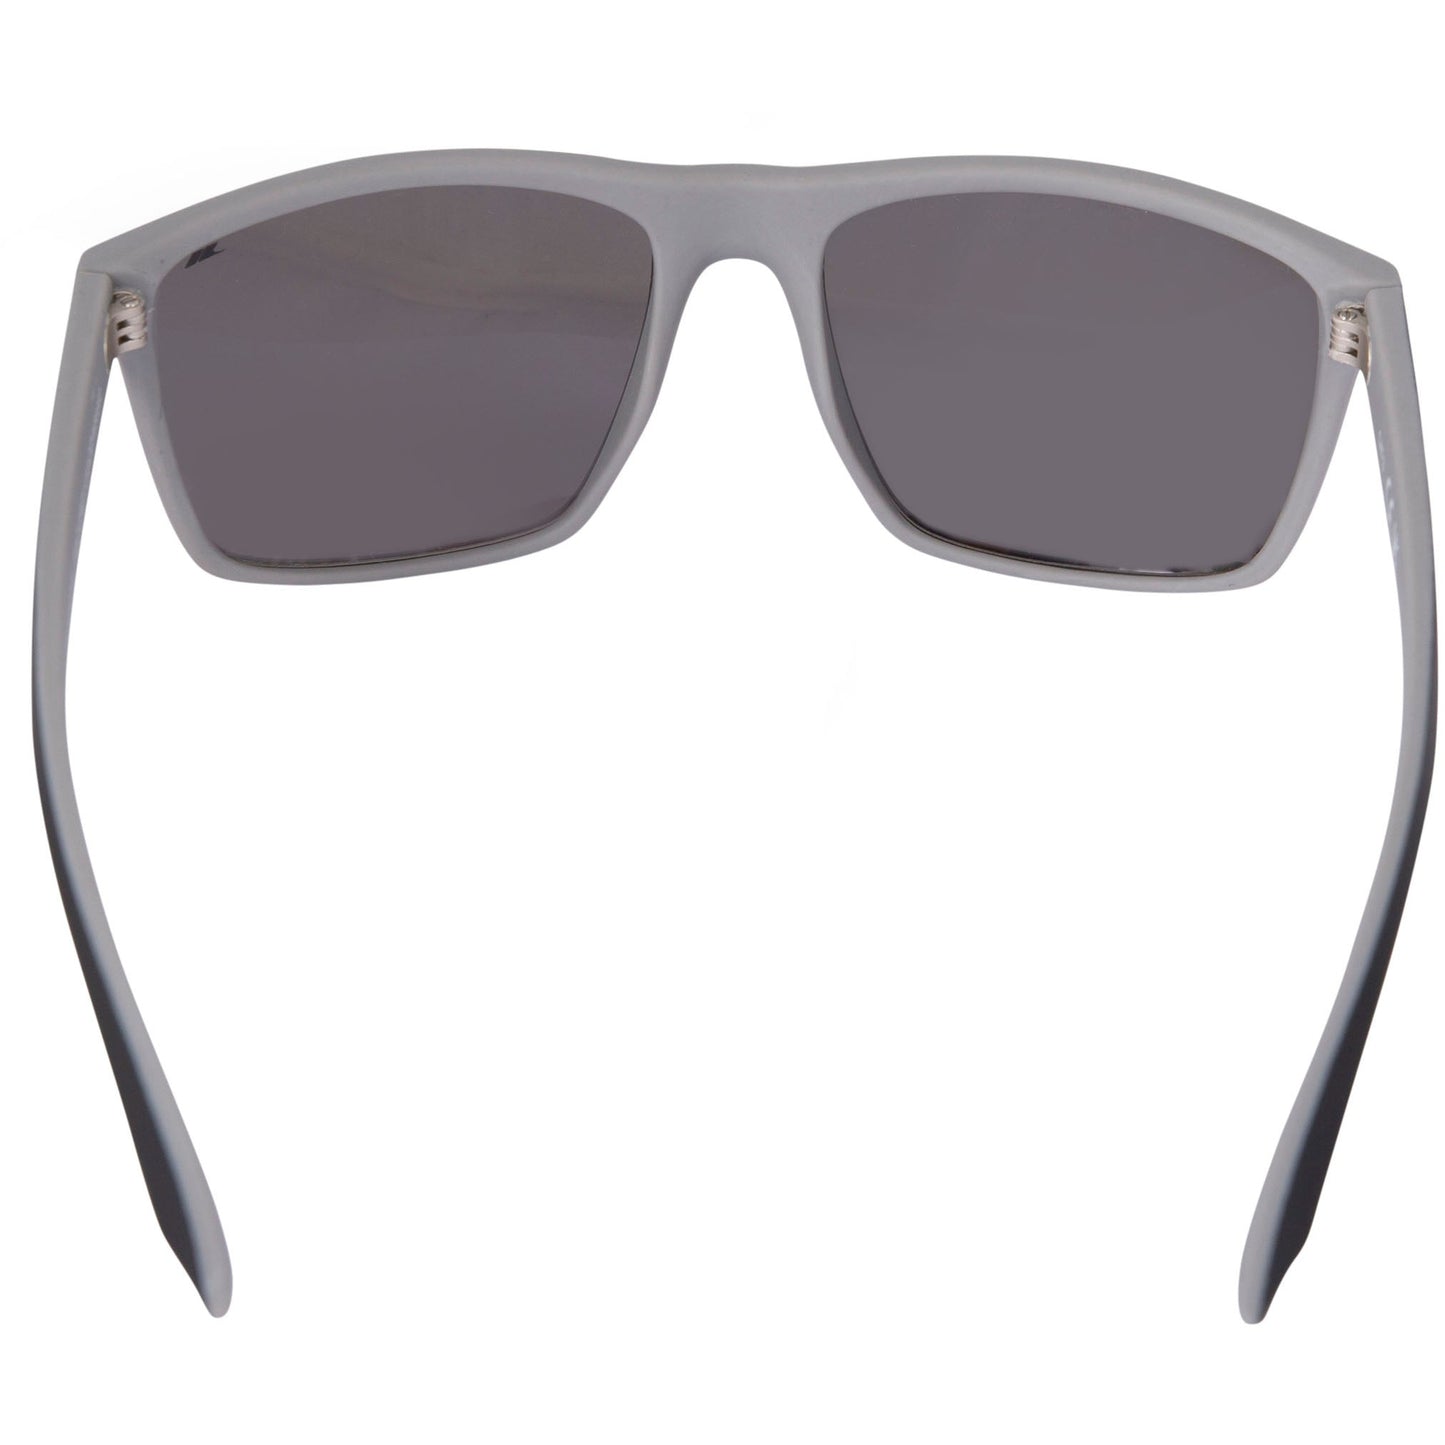 Zest Adults Sunglasses in Grey